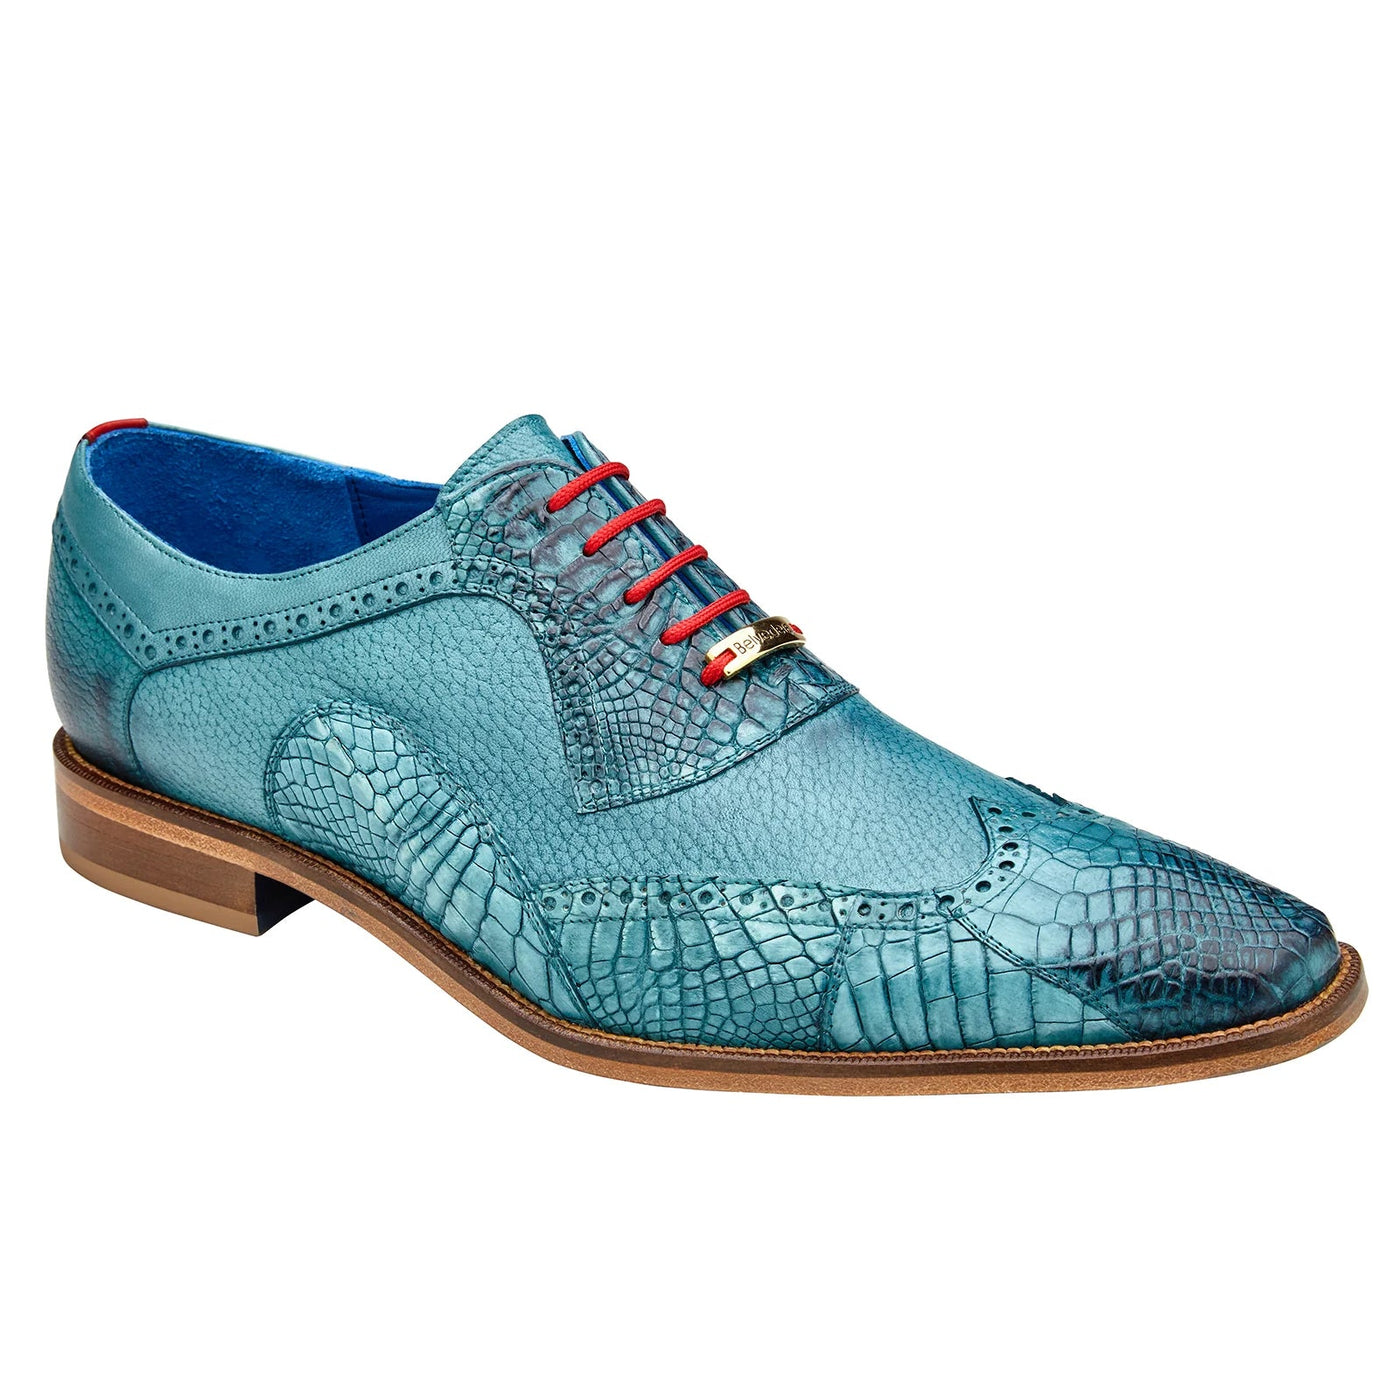 Men's Belvedere Roberto Calf & Alligator Wingtip Dress Shoe in Antique Aqua Blue